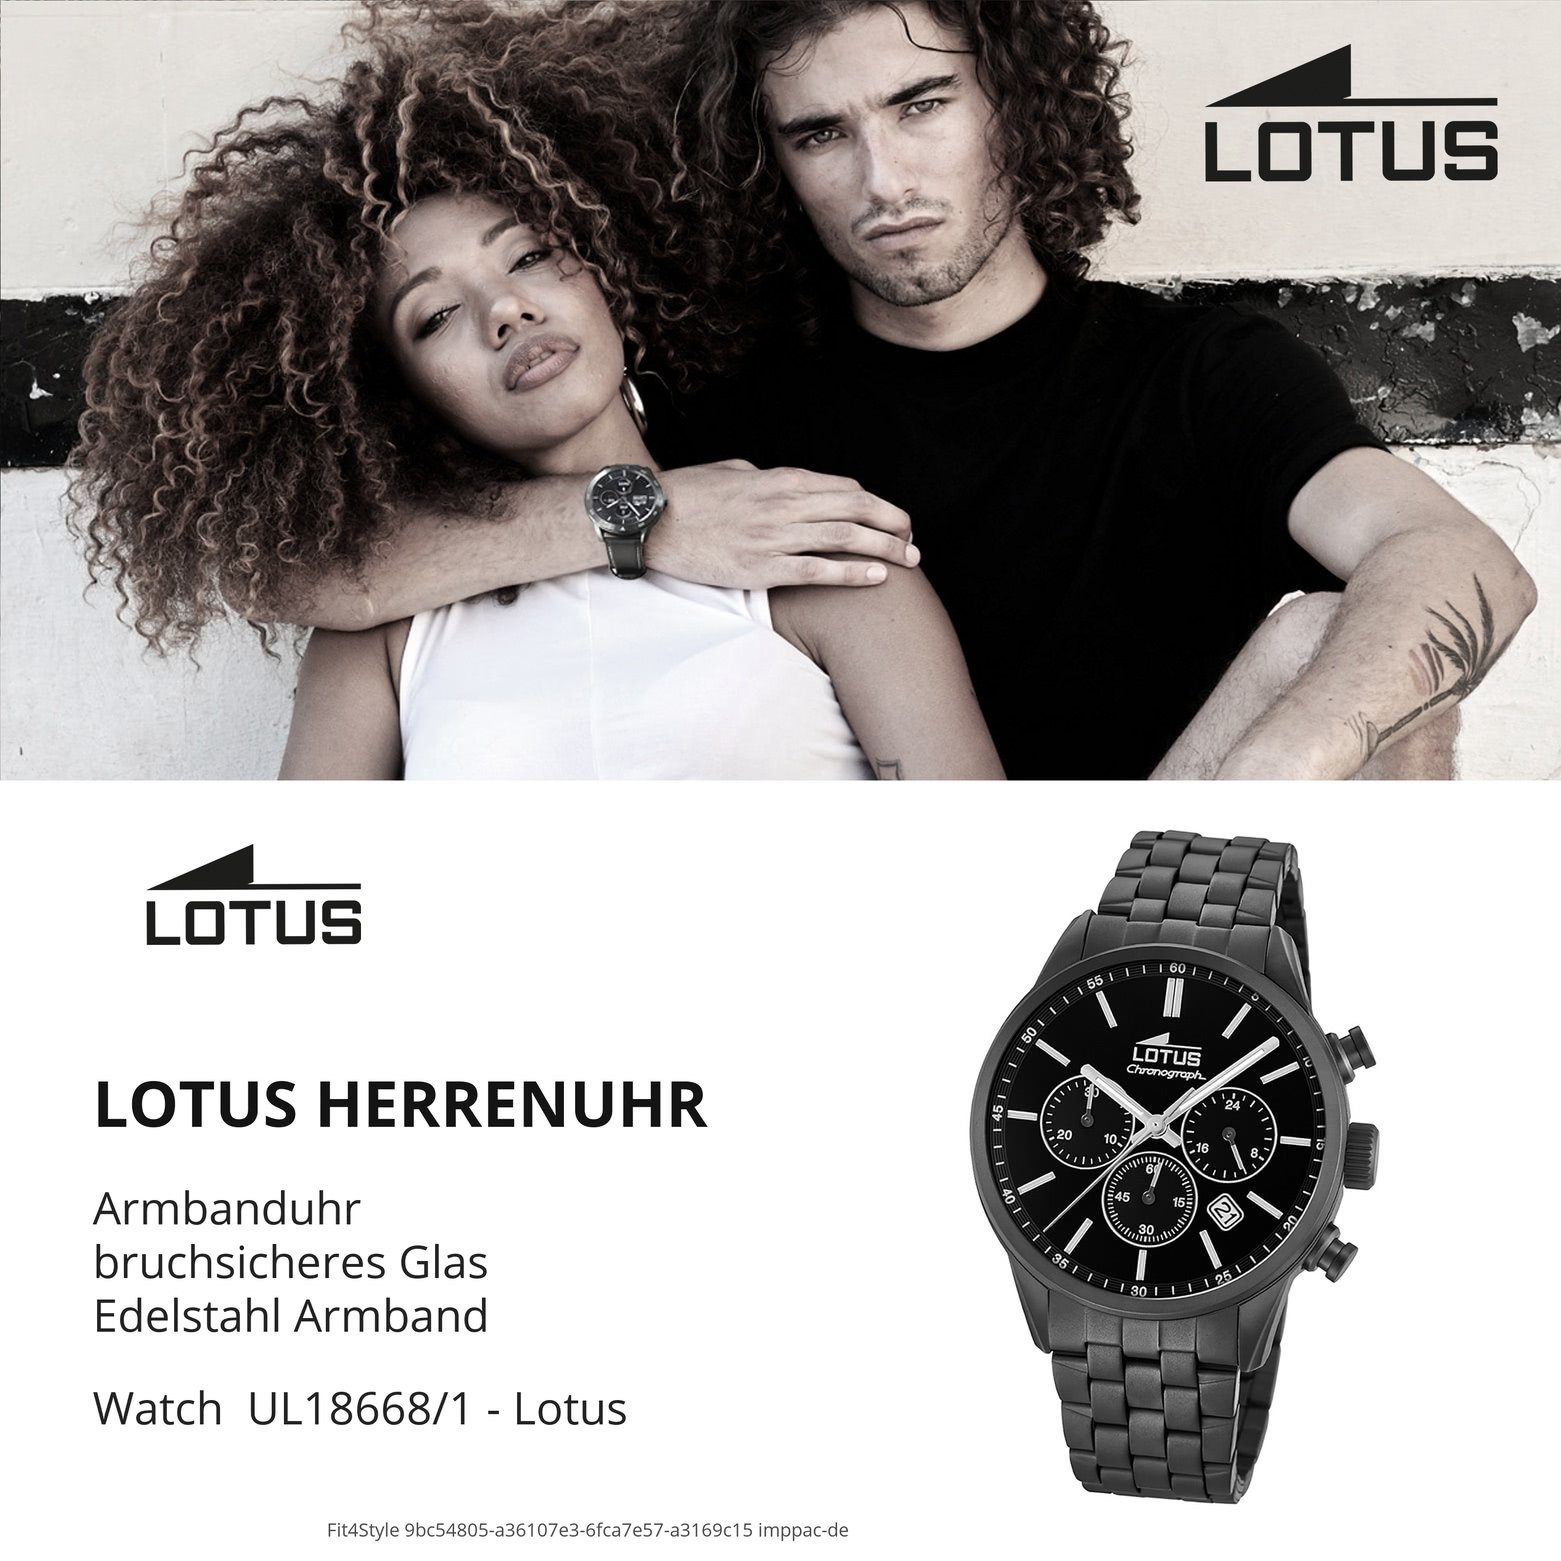 Herren Armbanduhr Herren Uhr Sport (ca. Edelstahl, groß LOTUS 42mm), Edelstahlarmband rund, 18668/1 Quarzuhr schwarz Lotus